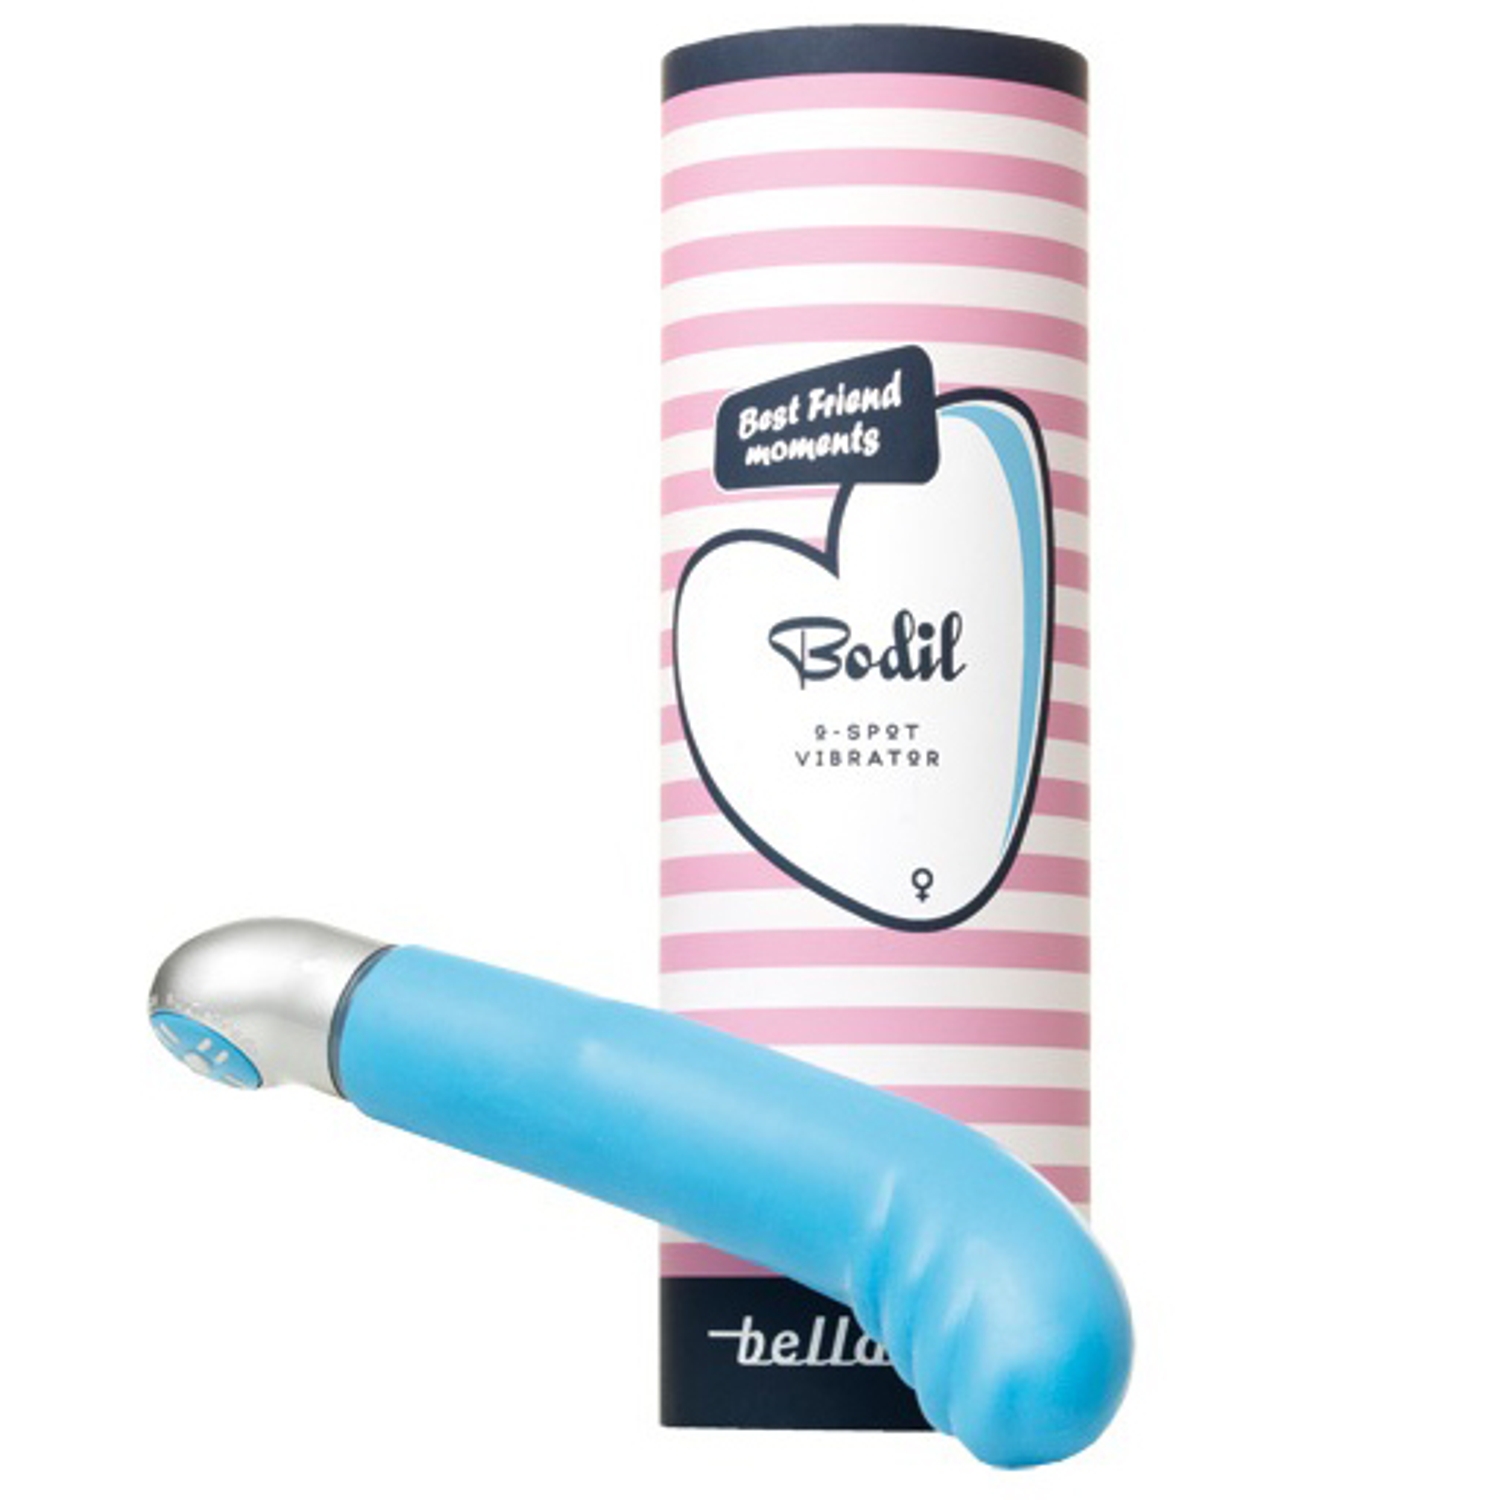 Belladot Bodil G-punkts Vibrator - Blue